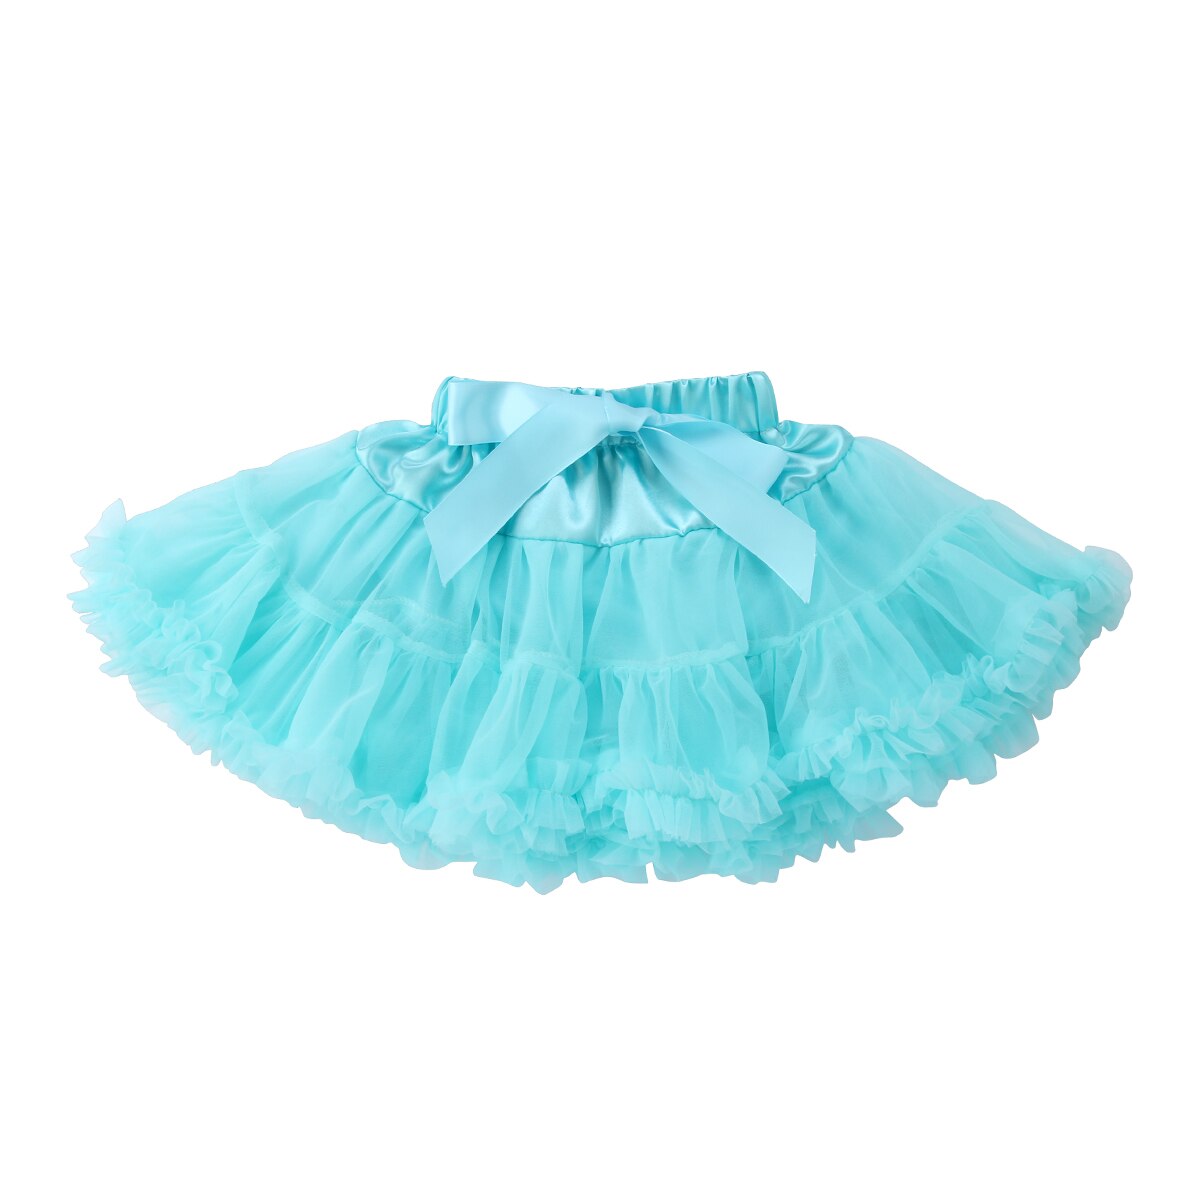 Baby børn piger sommer fluffy tutu kjole nederdel prinsesse fødselsdagsfest underkjole ballet dancewear nederdel 0-24m: Guld